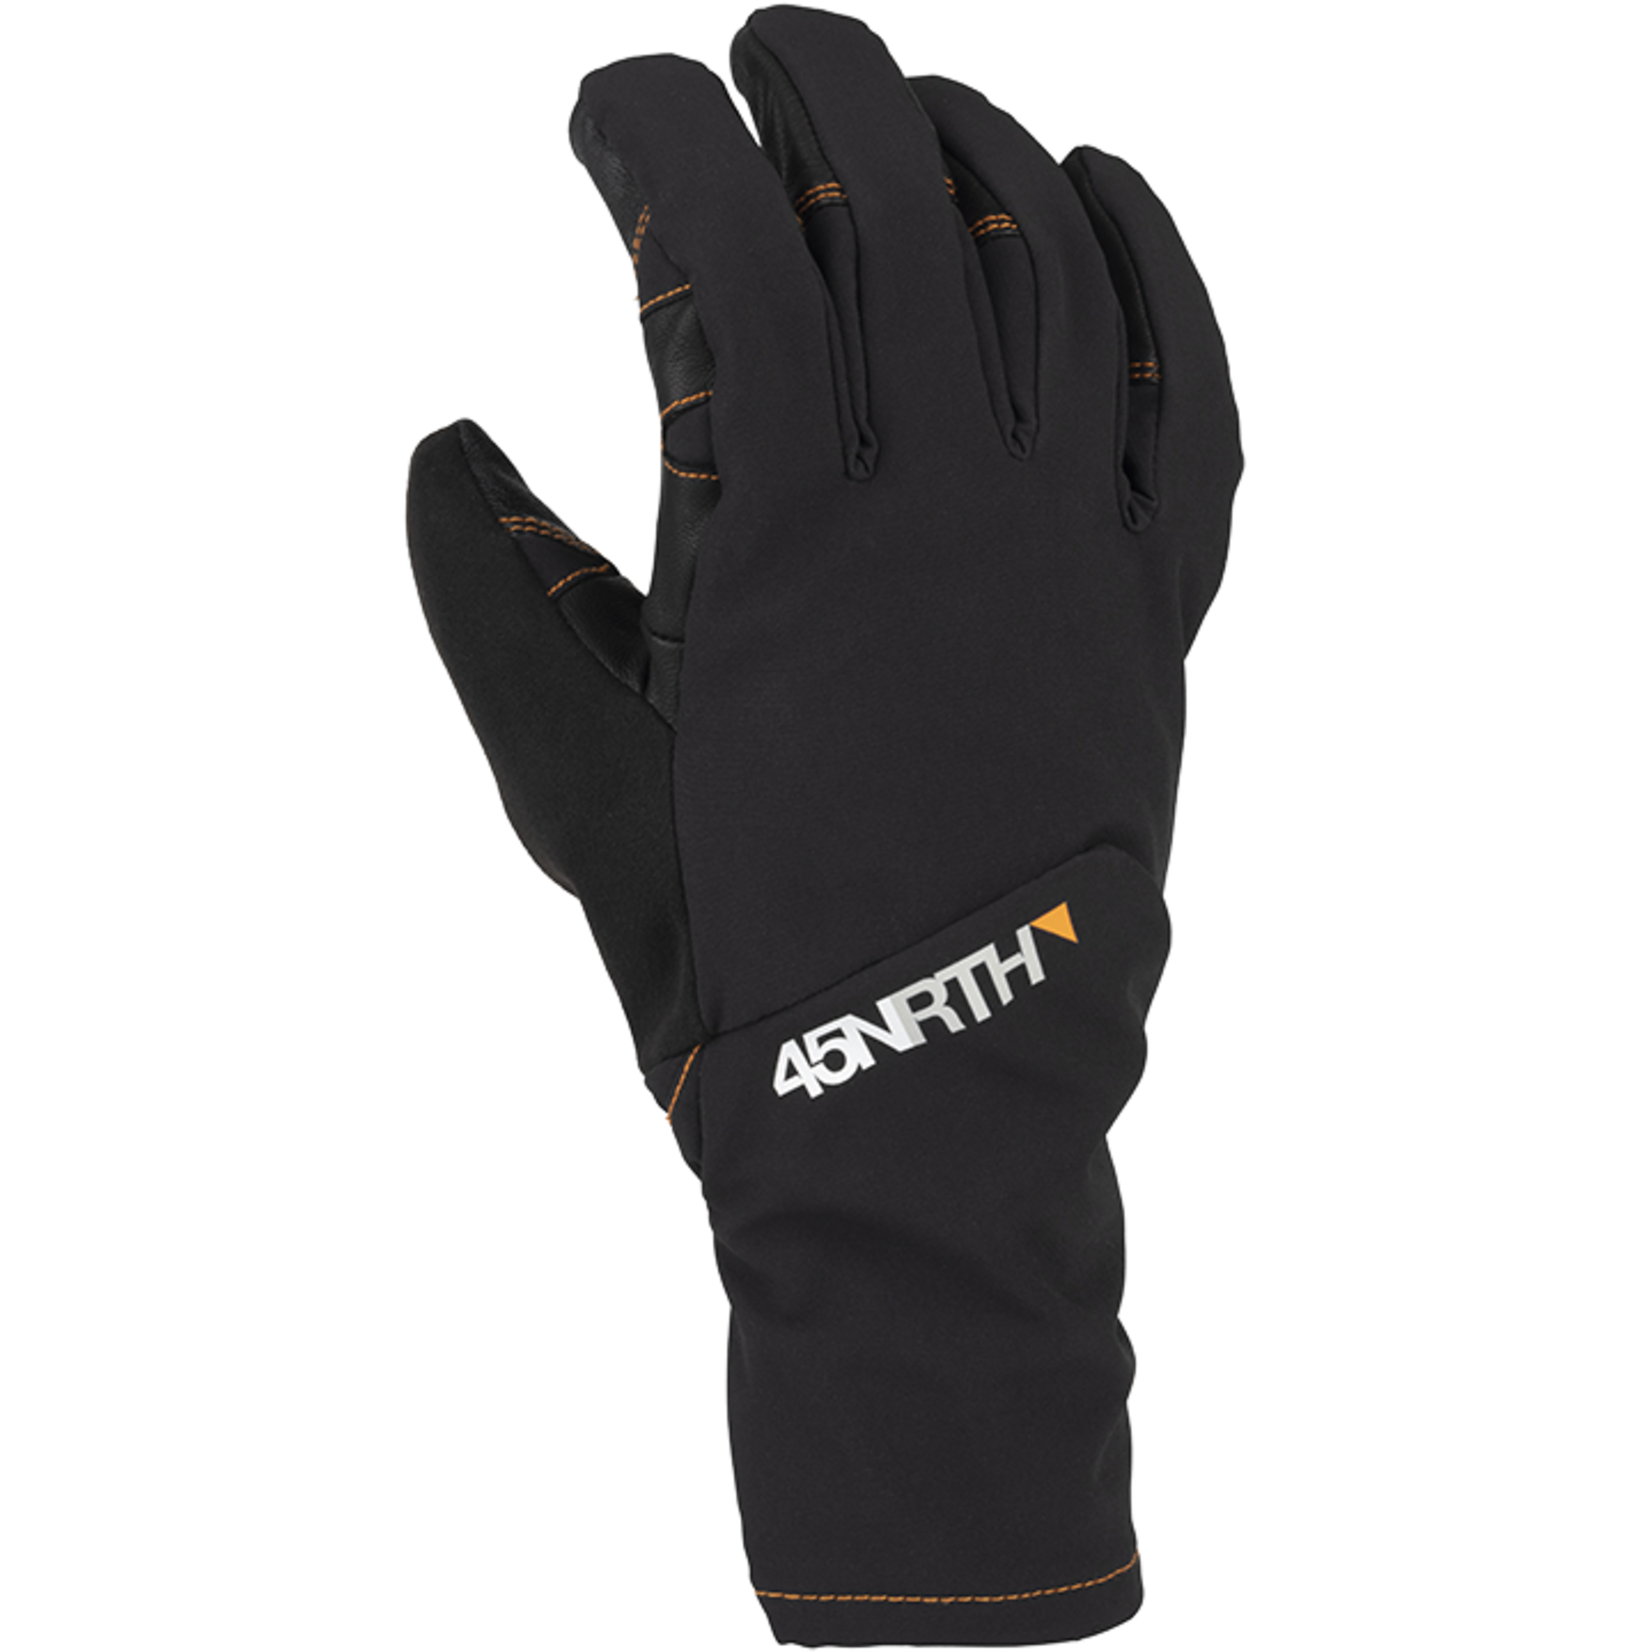 45NRTH Sturmfist 5 Glove